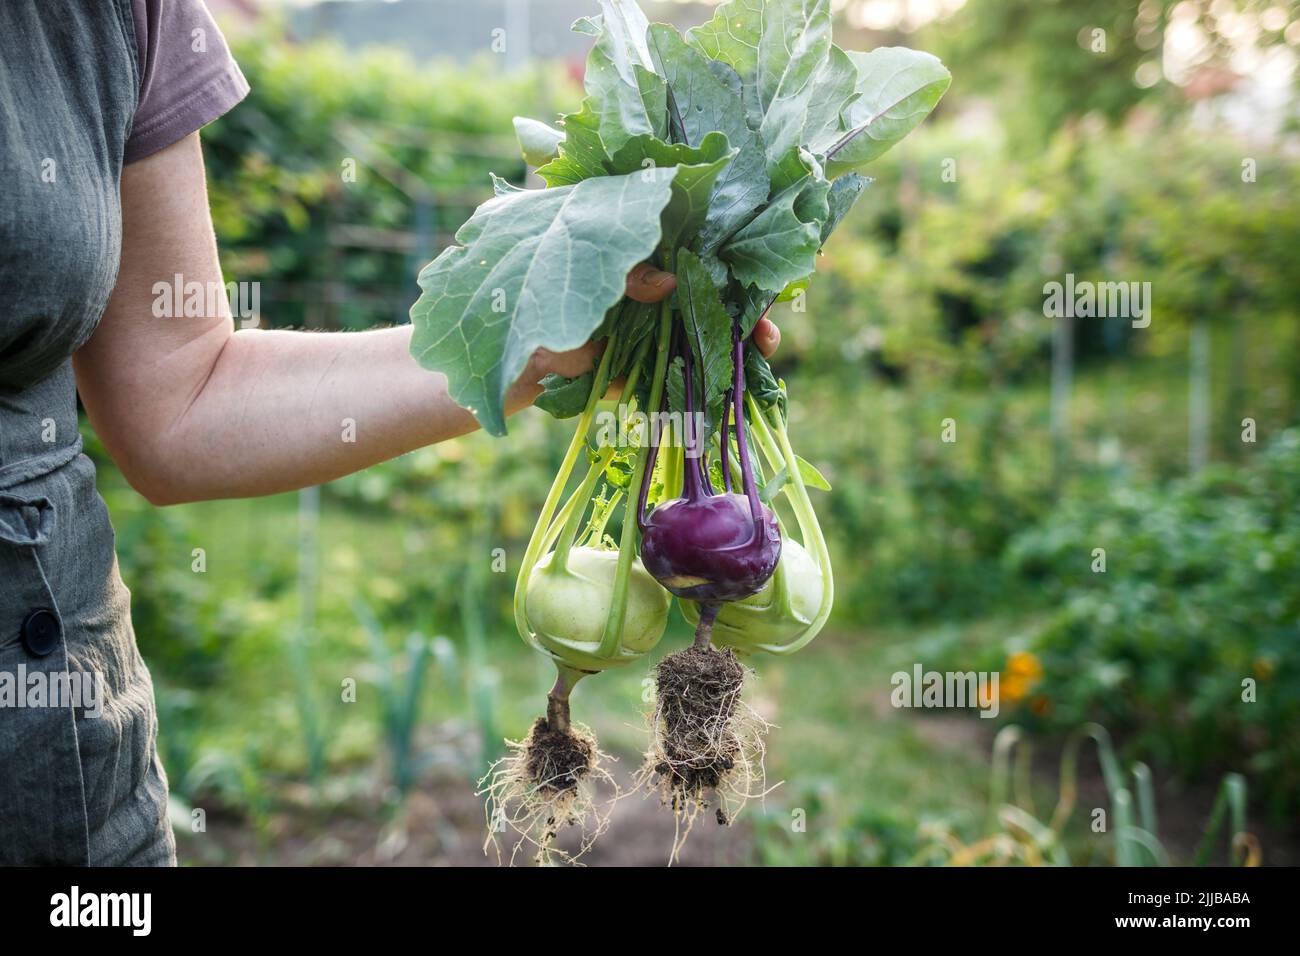 Kohlrabi in female hand. Woman harvesting ripe organic green and purple kohlrabi in vegetable garden Stock Photo